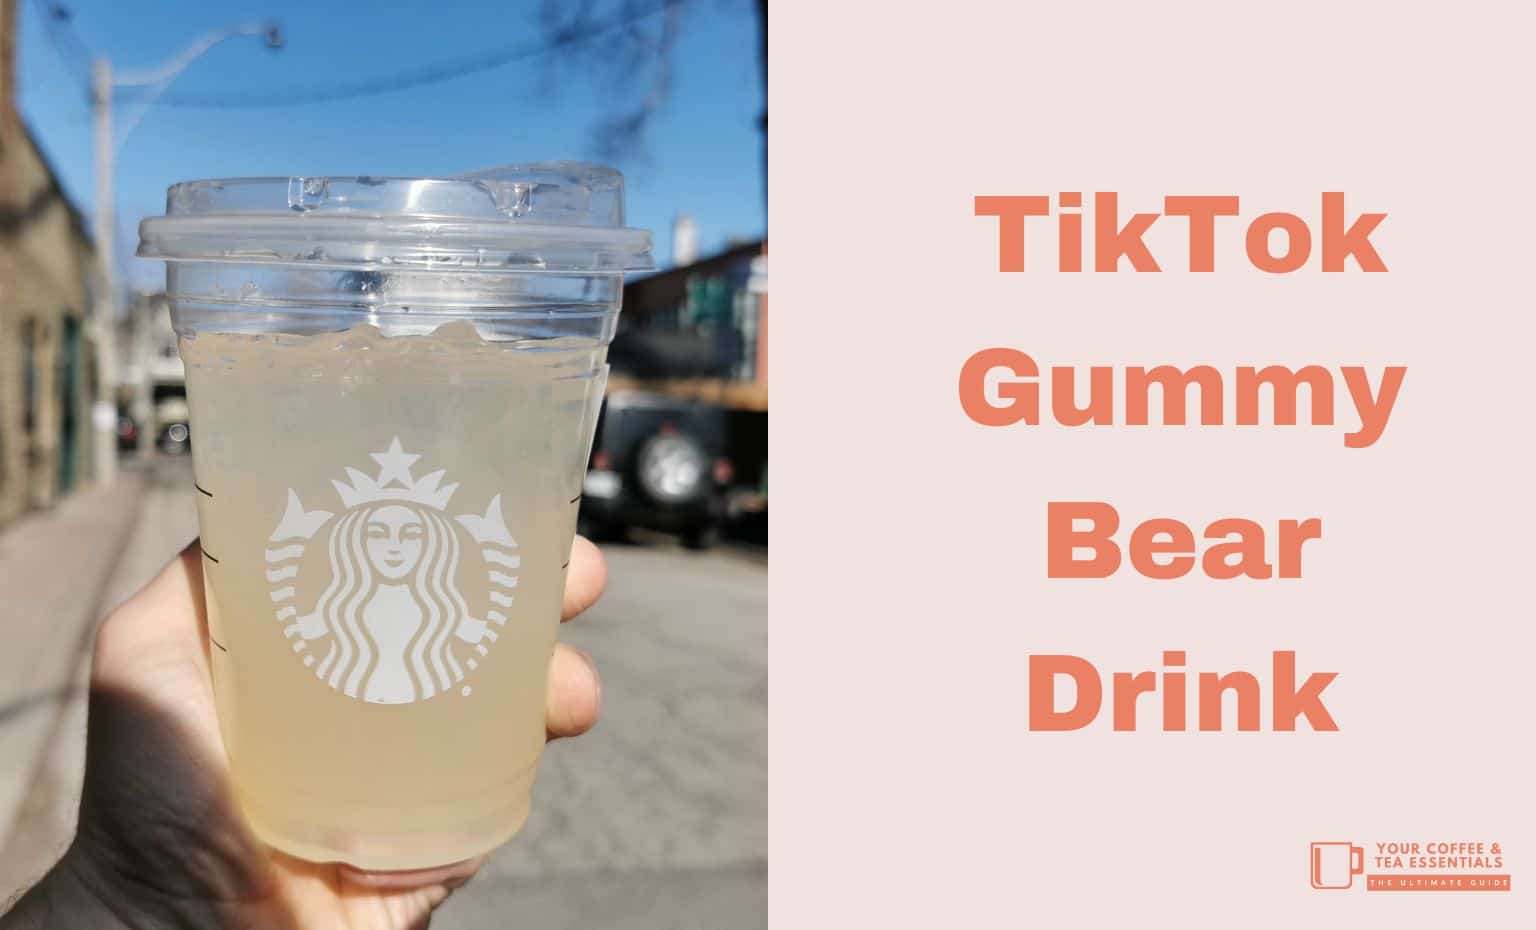 3. The TikTok Gummy Bear Drink